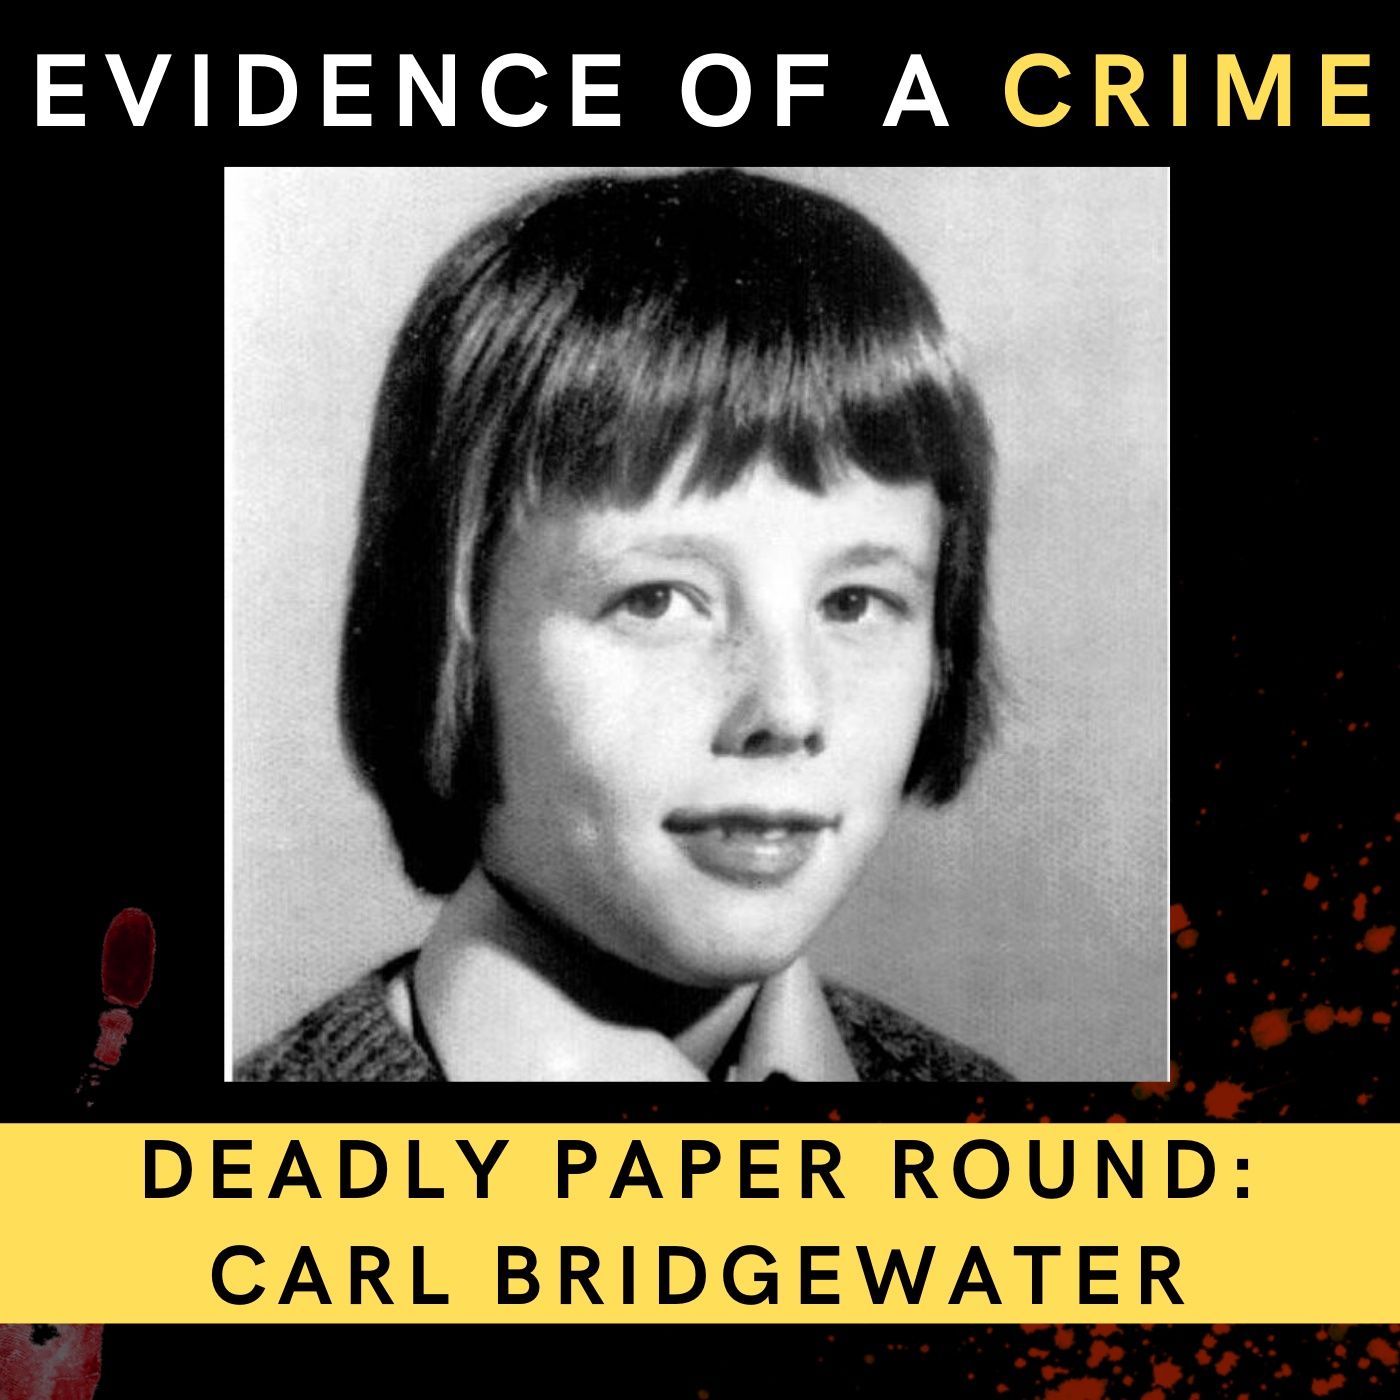 9. Deadly Paper Round: The Murder of Carl Bridgewater